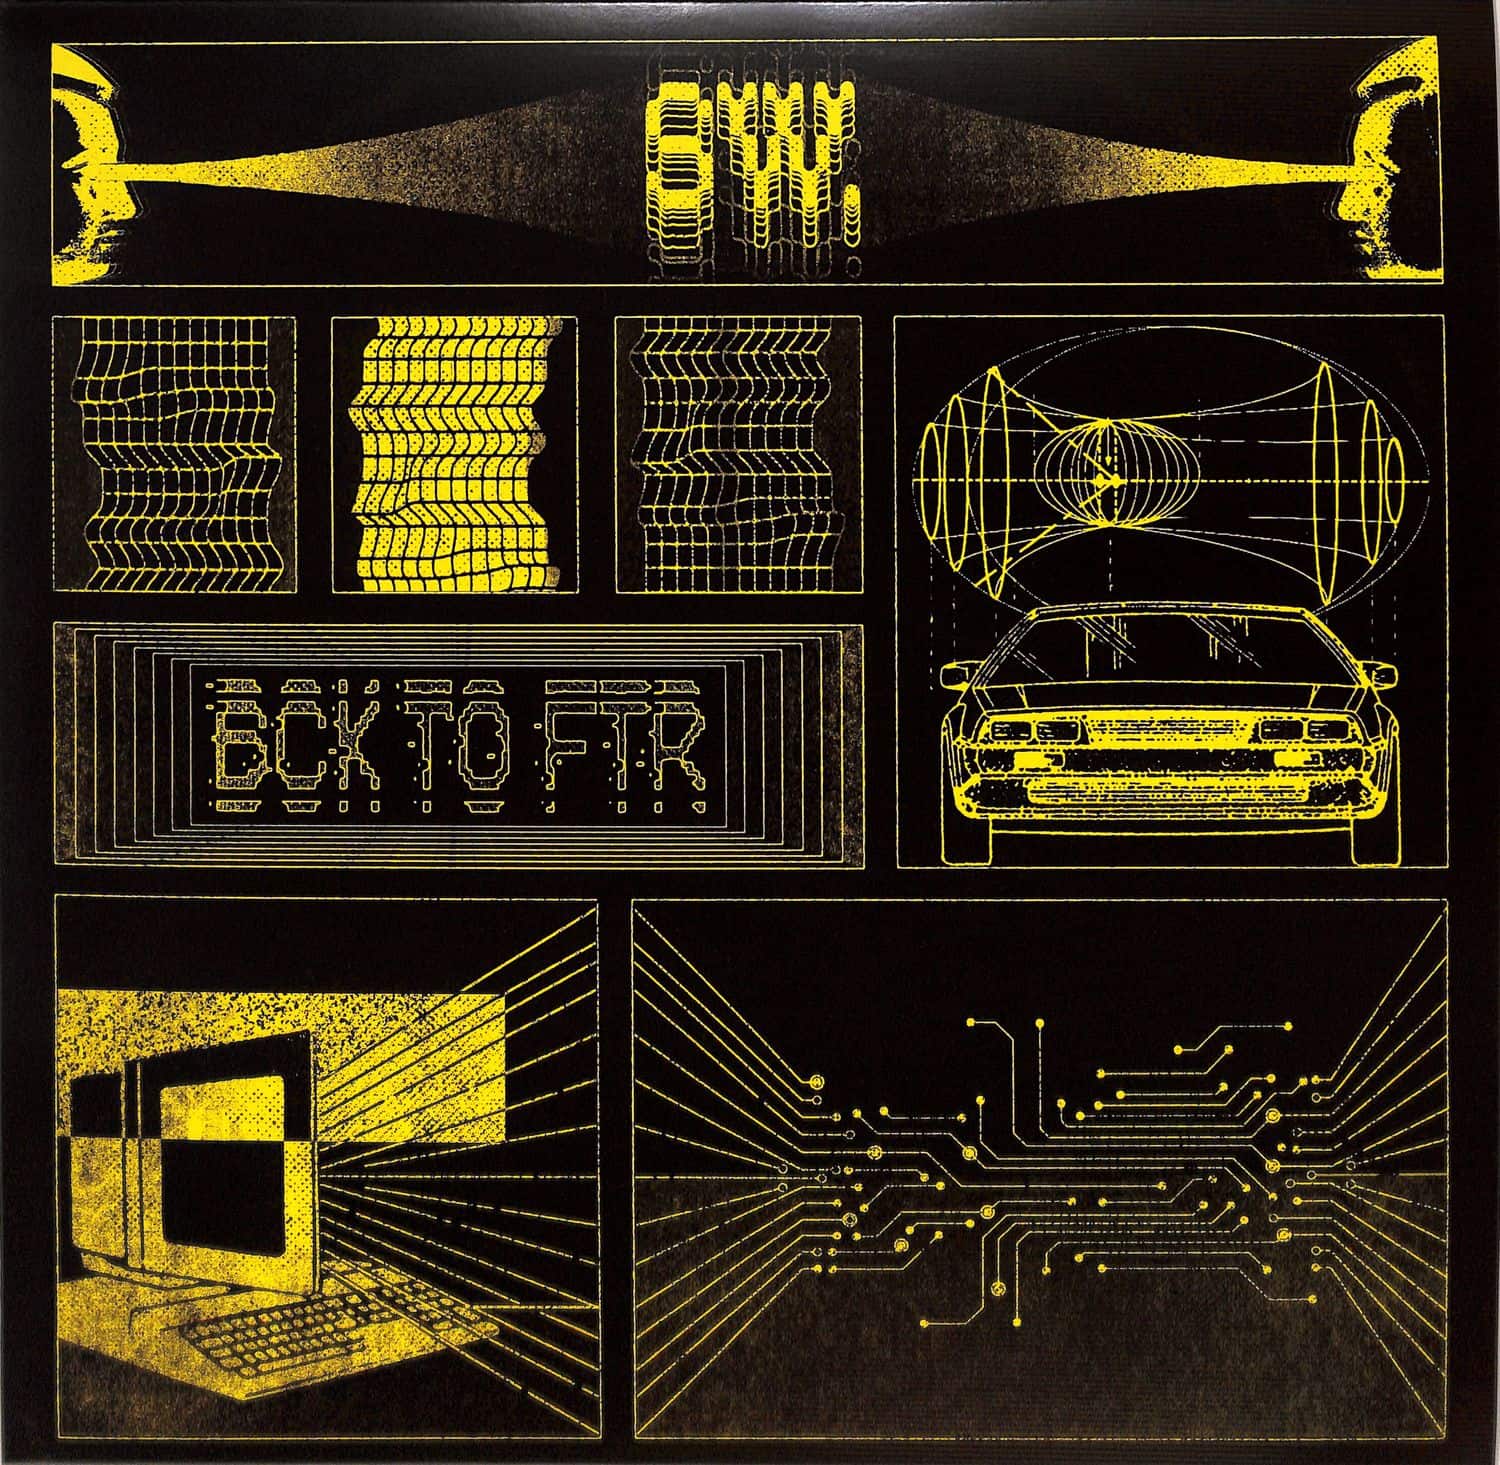 Sw. - BCK TO FTR